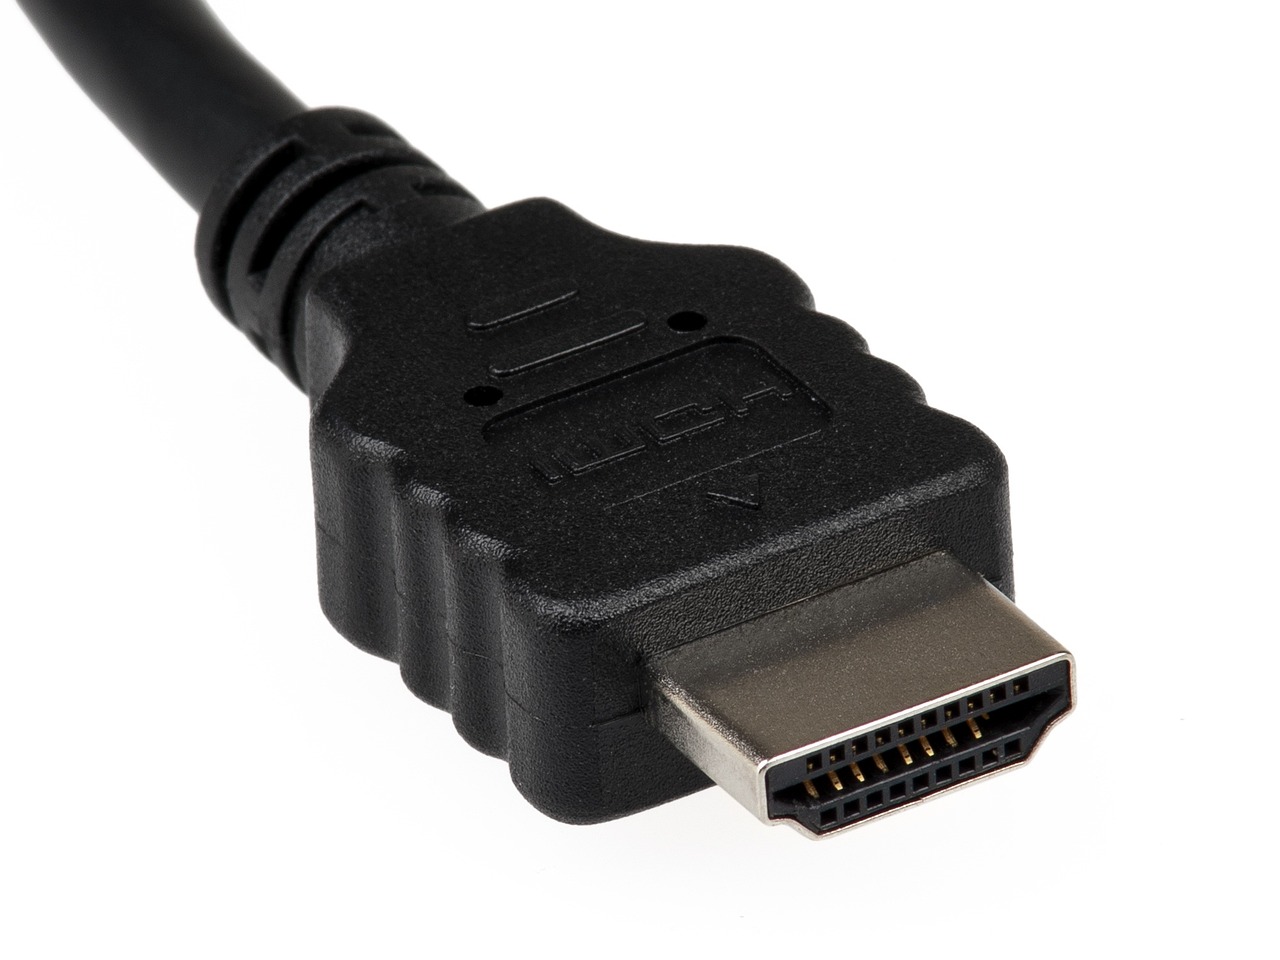 HDMI Connectors